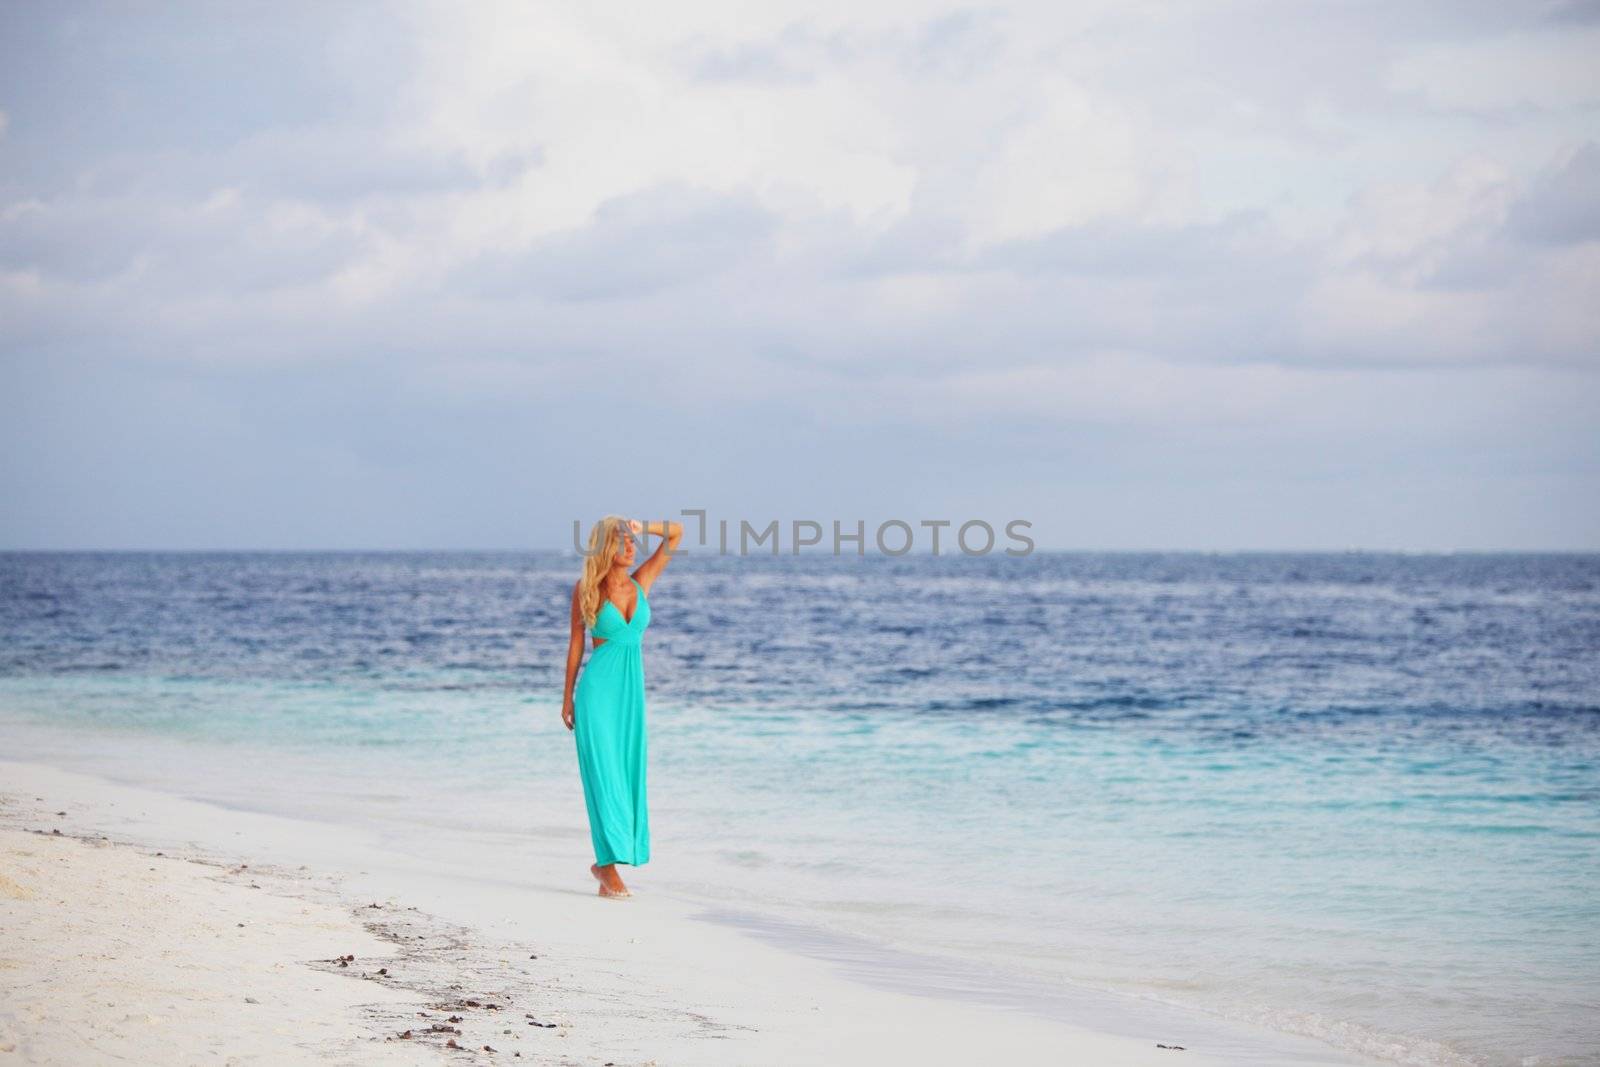 woman in a blue dress on the ocean coast